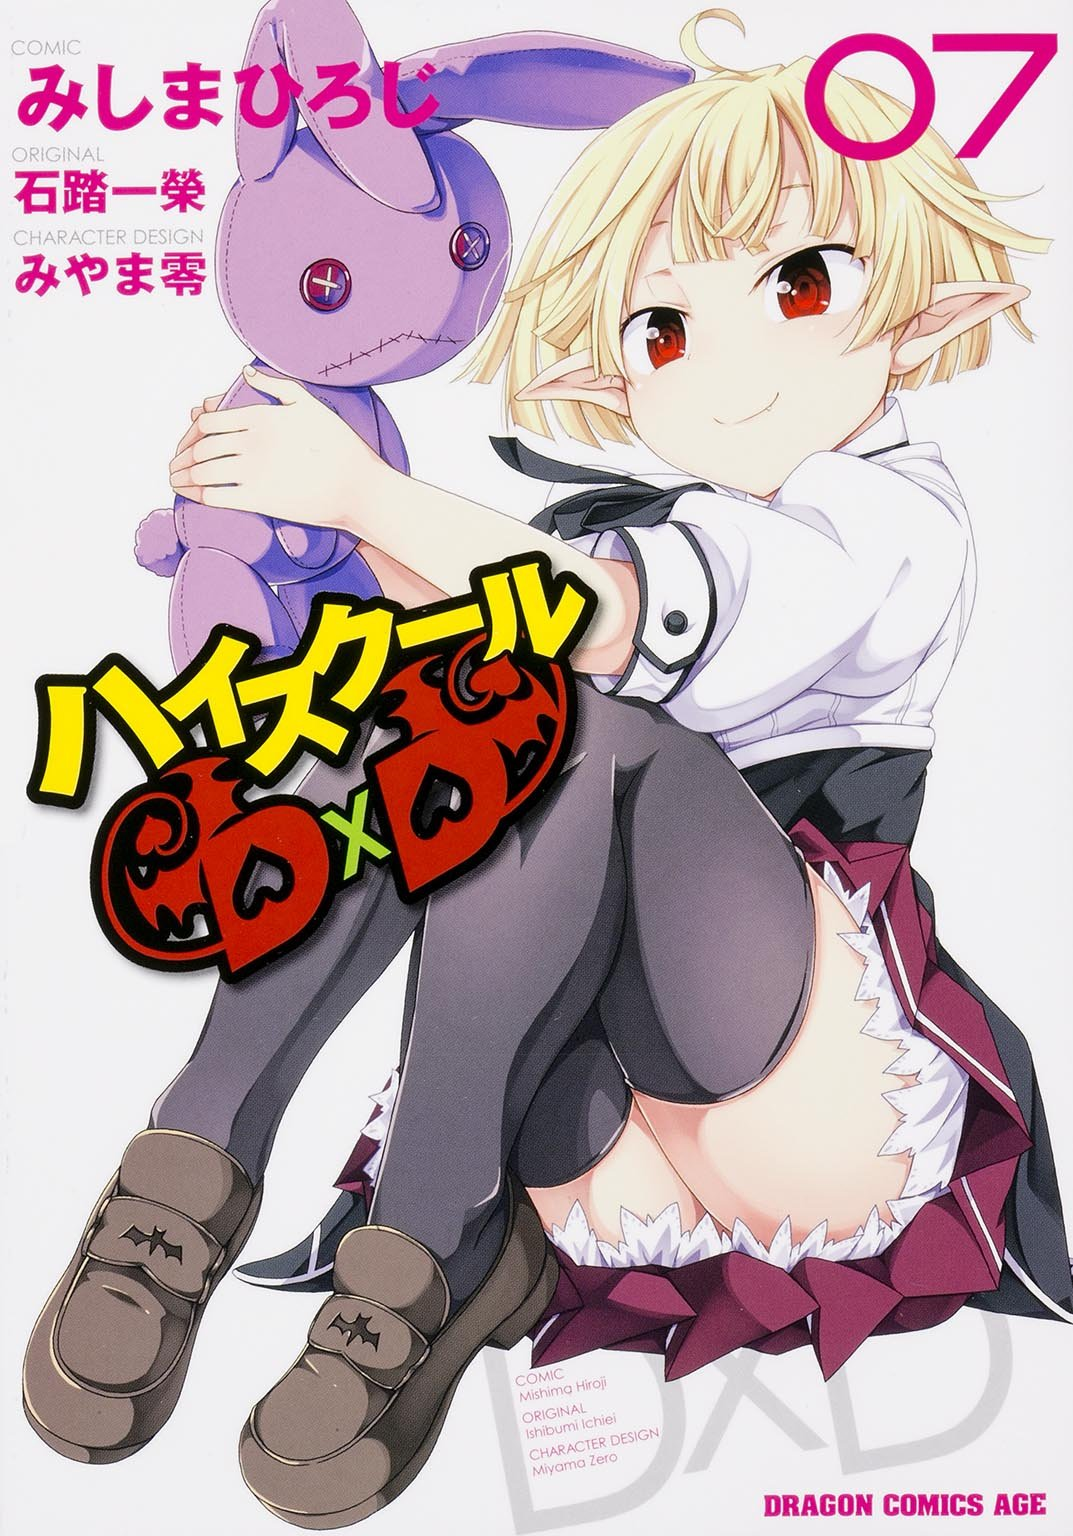 Manga Volume 7, High School DxD Wiki